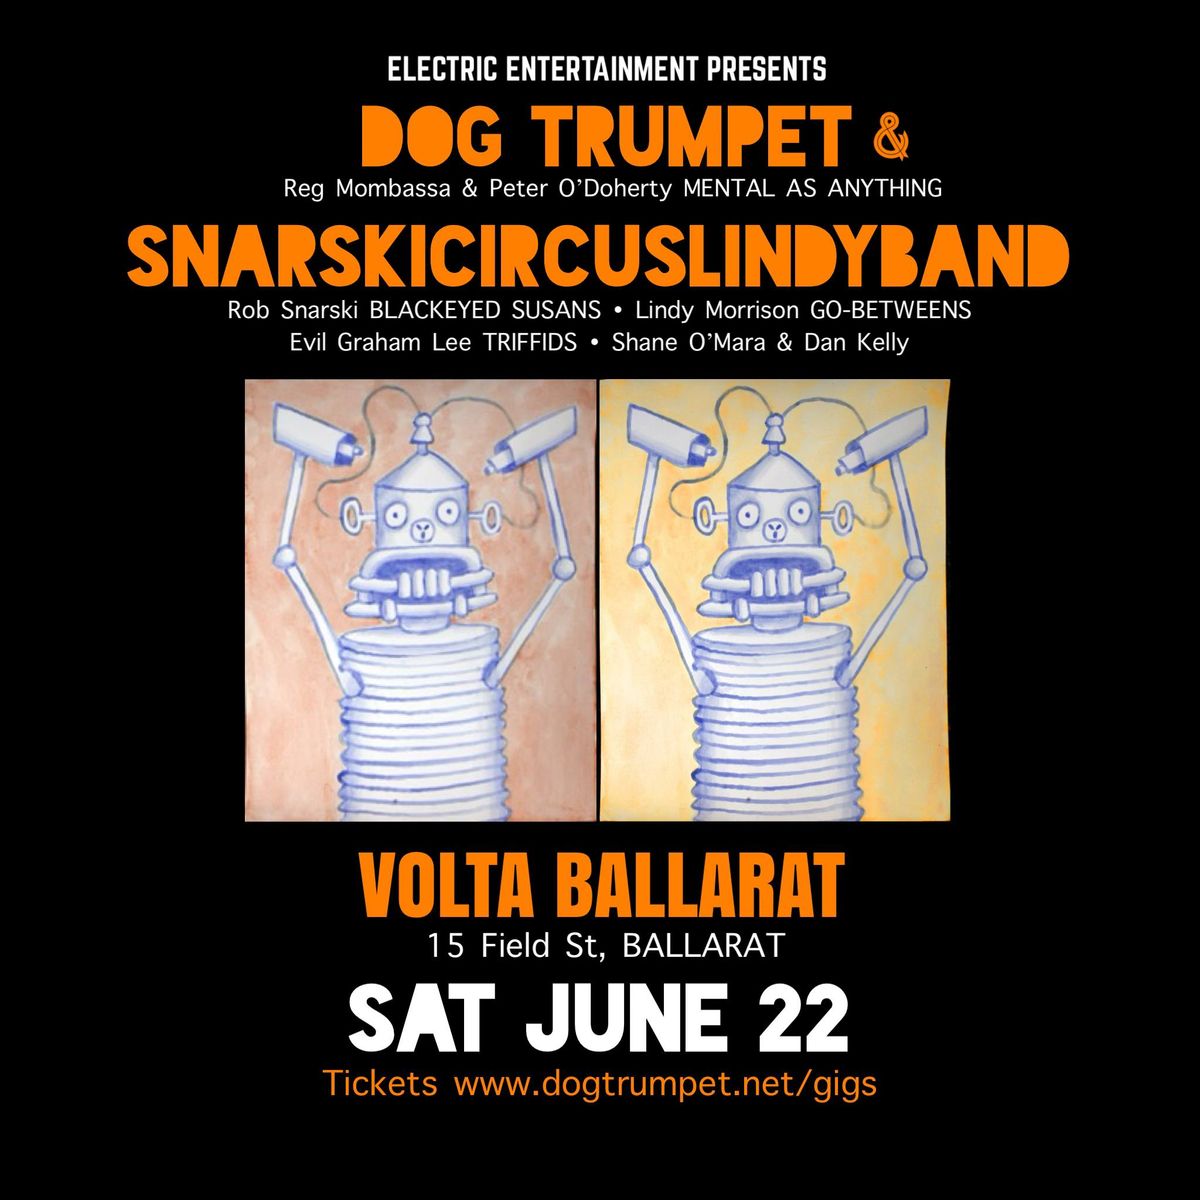 Dog Trumpet + SnarskiCircusLindyBand @ Volta Ballarat Vic